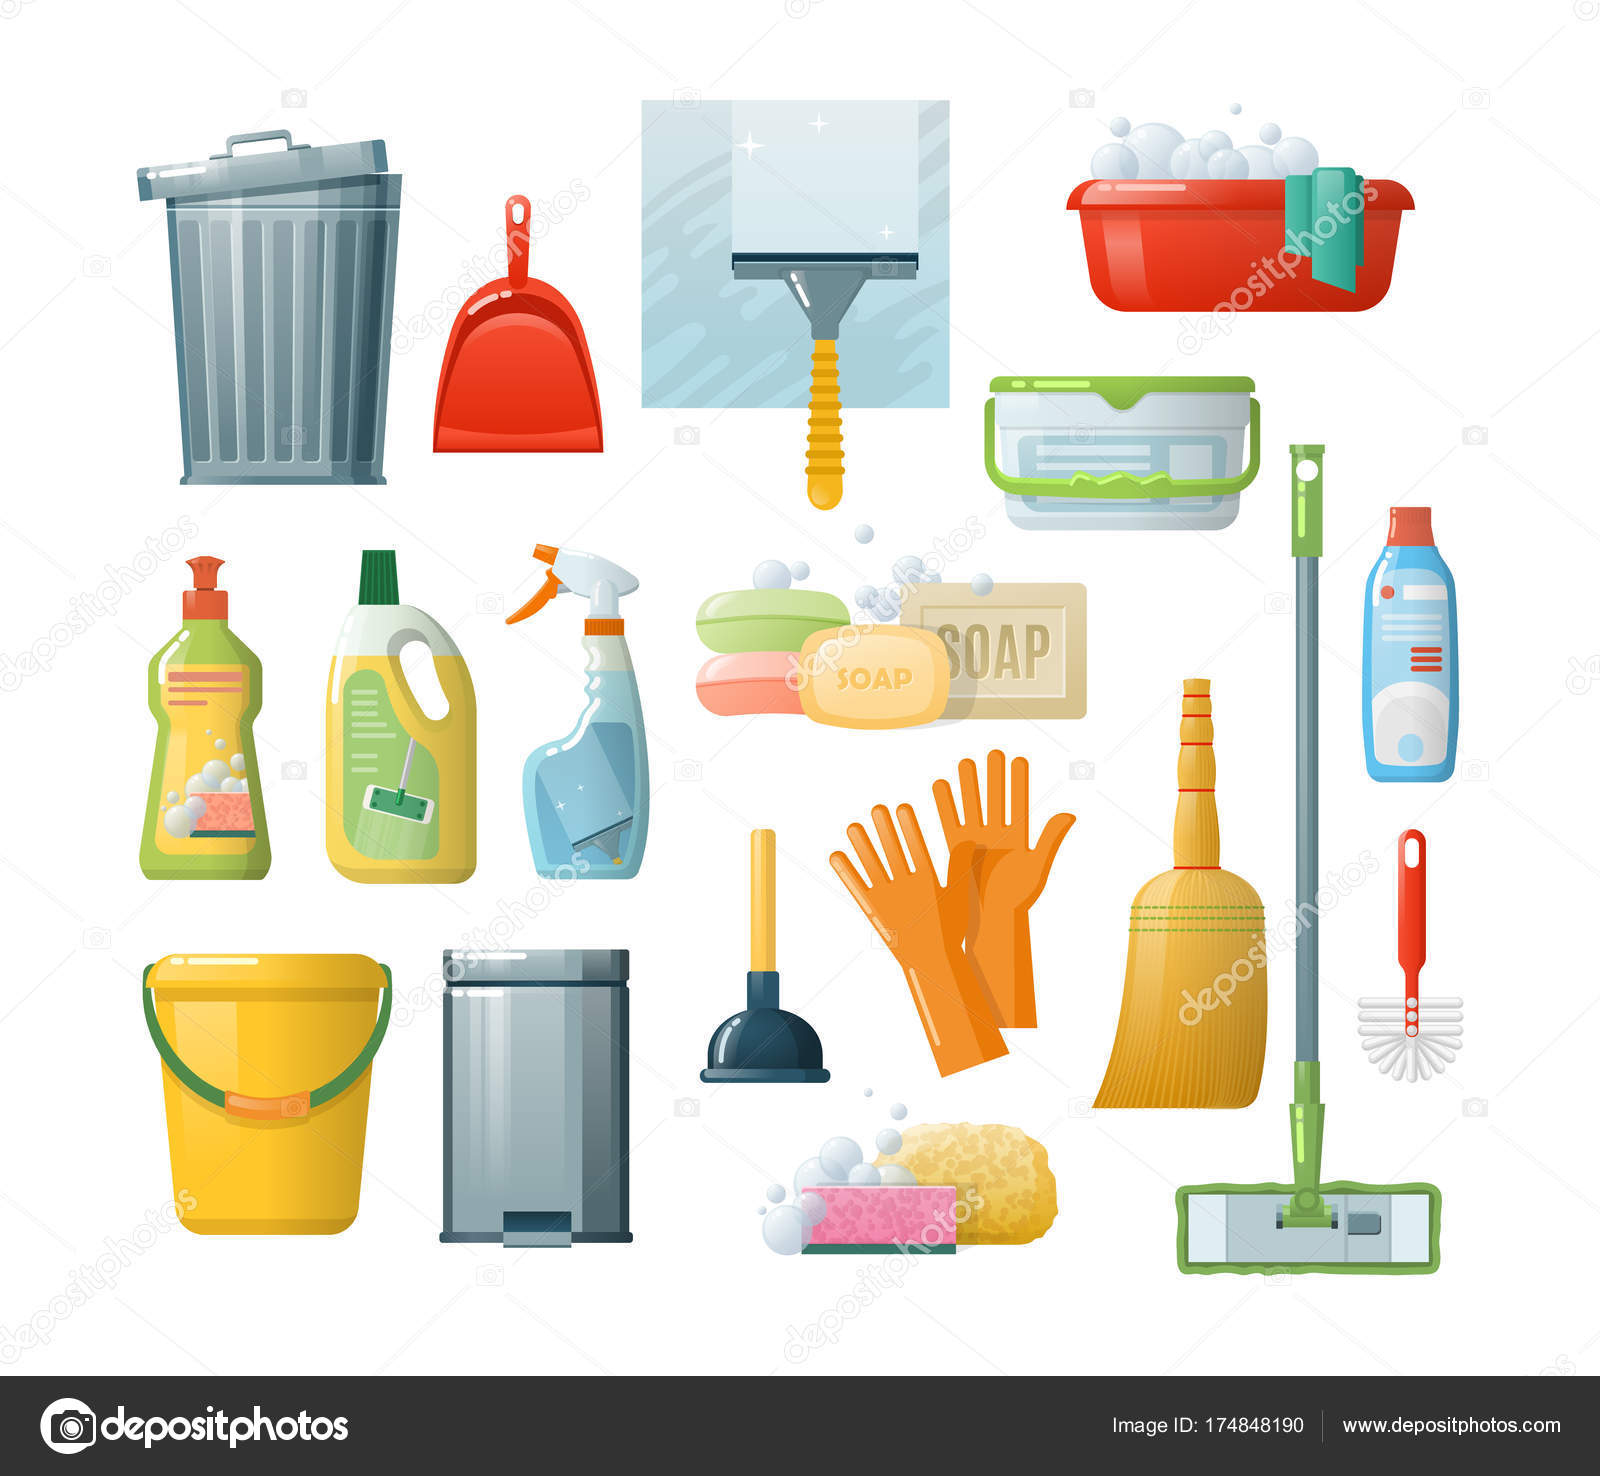 https://st3.depositphotos.com/3991093/17484/v/1600/depositphotos_174848190-stock-illustration-set-accessories-for-cleaning-buckets.jpg